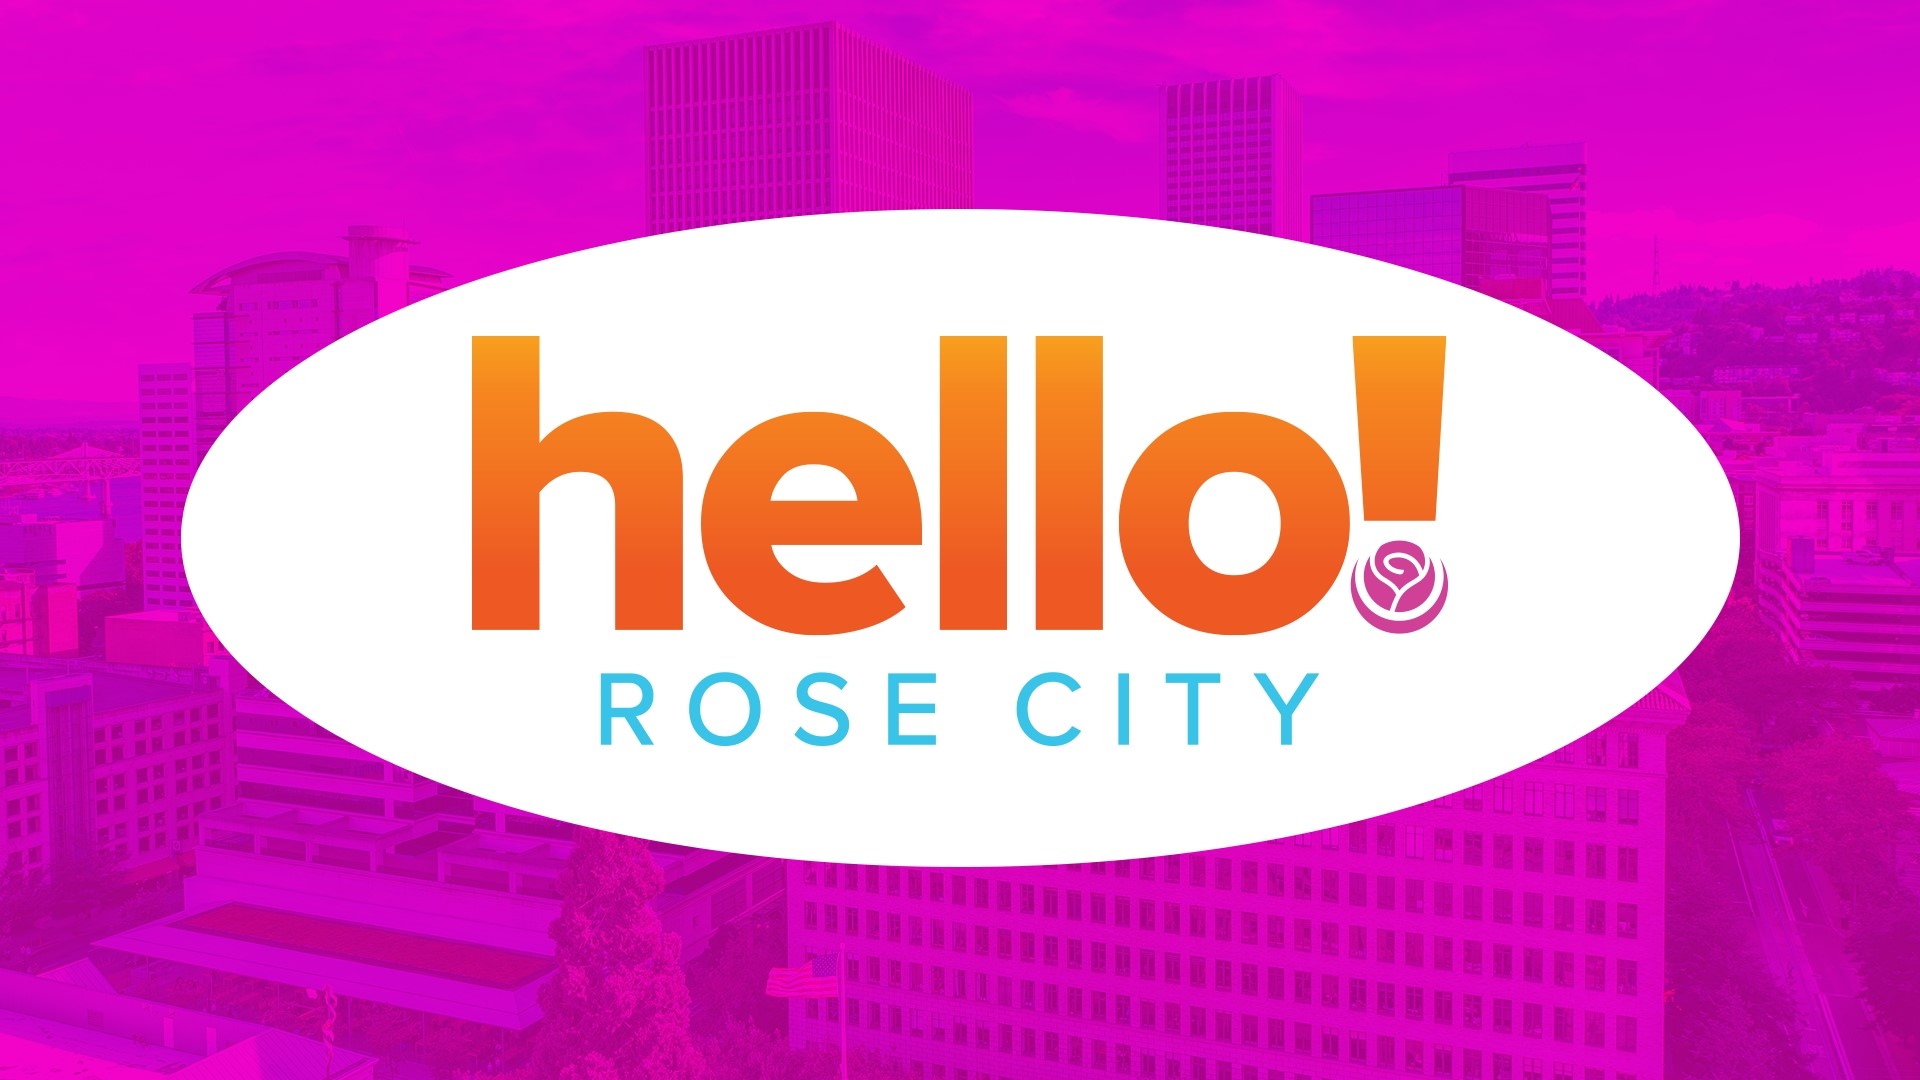 Hello, Rose City!